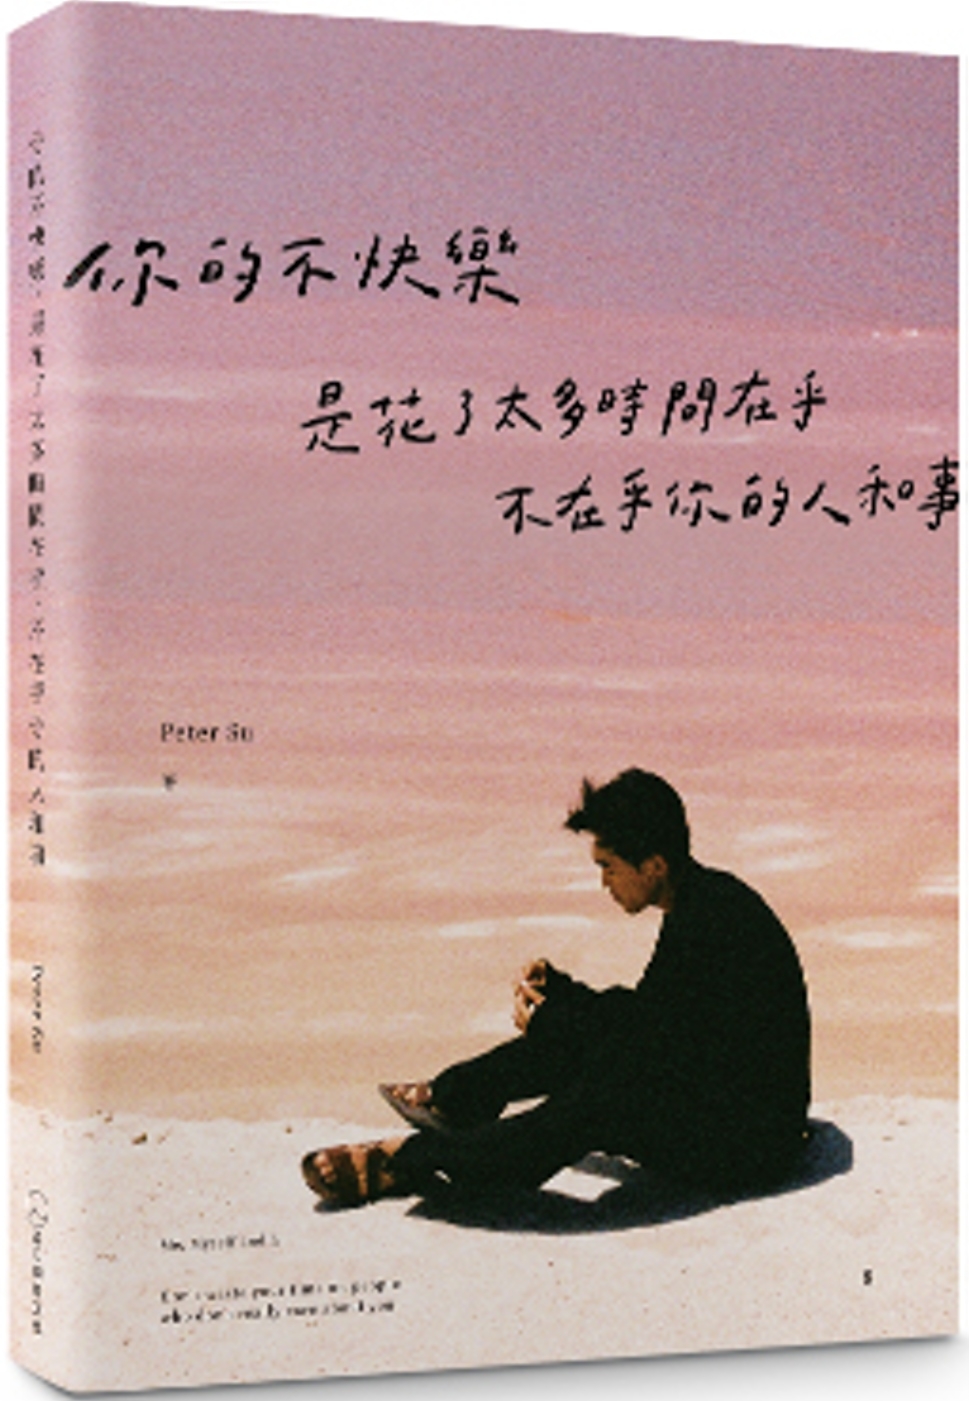 Peter Su《你的不快乐，是花了太多时间在乎，不在乎你的人和事（粉红湖书封版）》是日创意文化